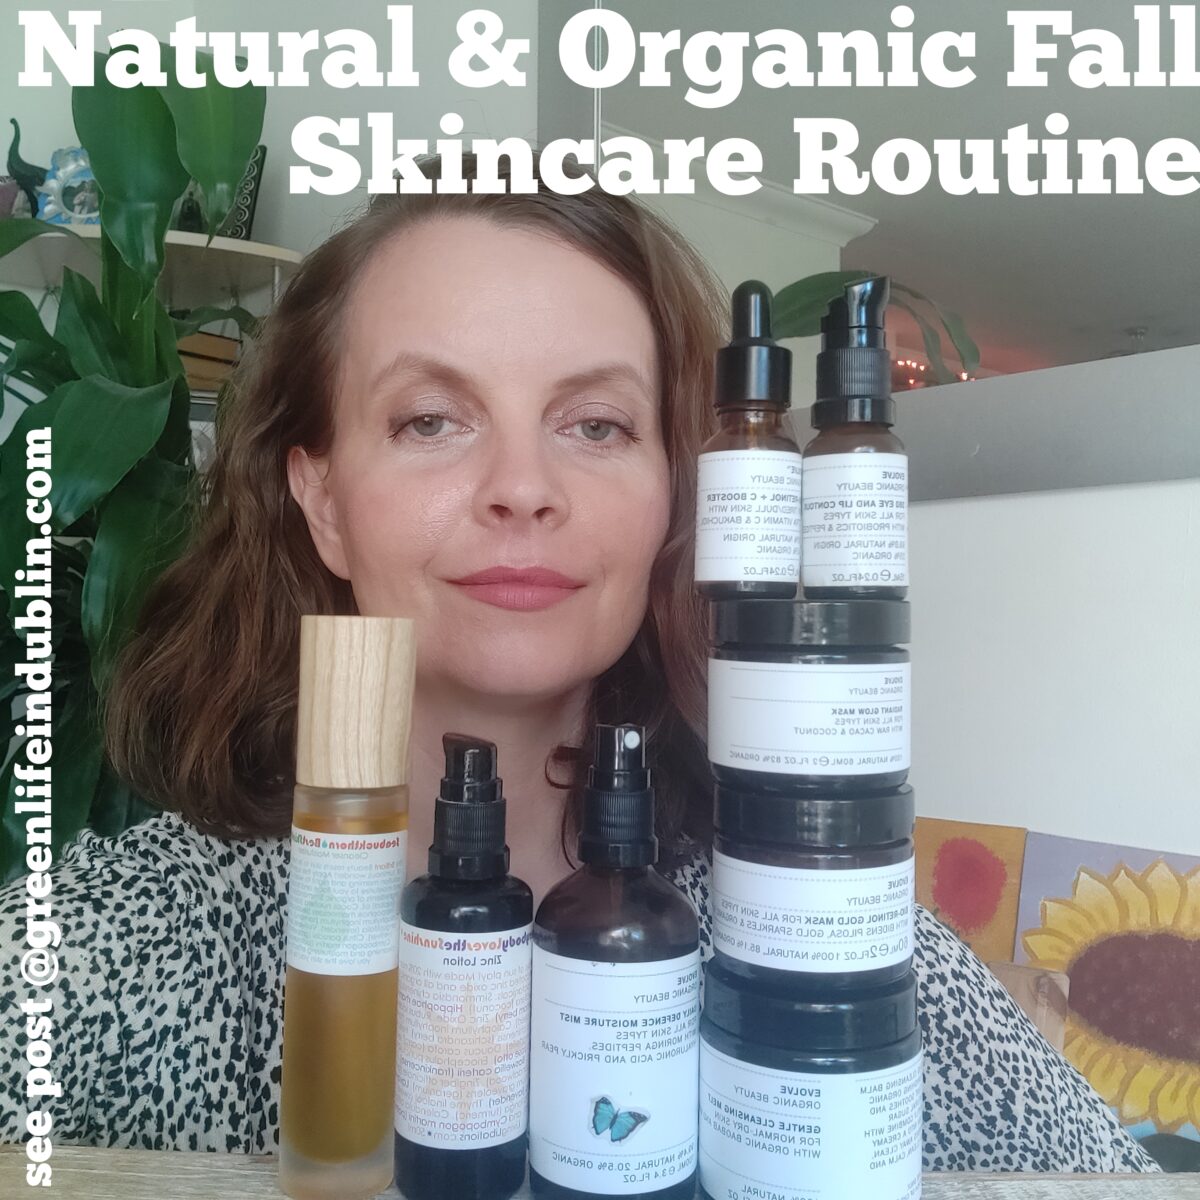 My Natural & Organic Fall Skincare Routine – Evolve Organic Beauty, Living Libations, Alteya Organics, Khadi & More